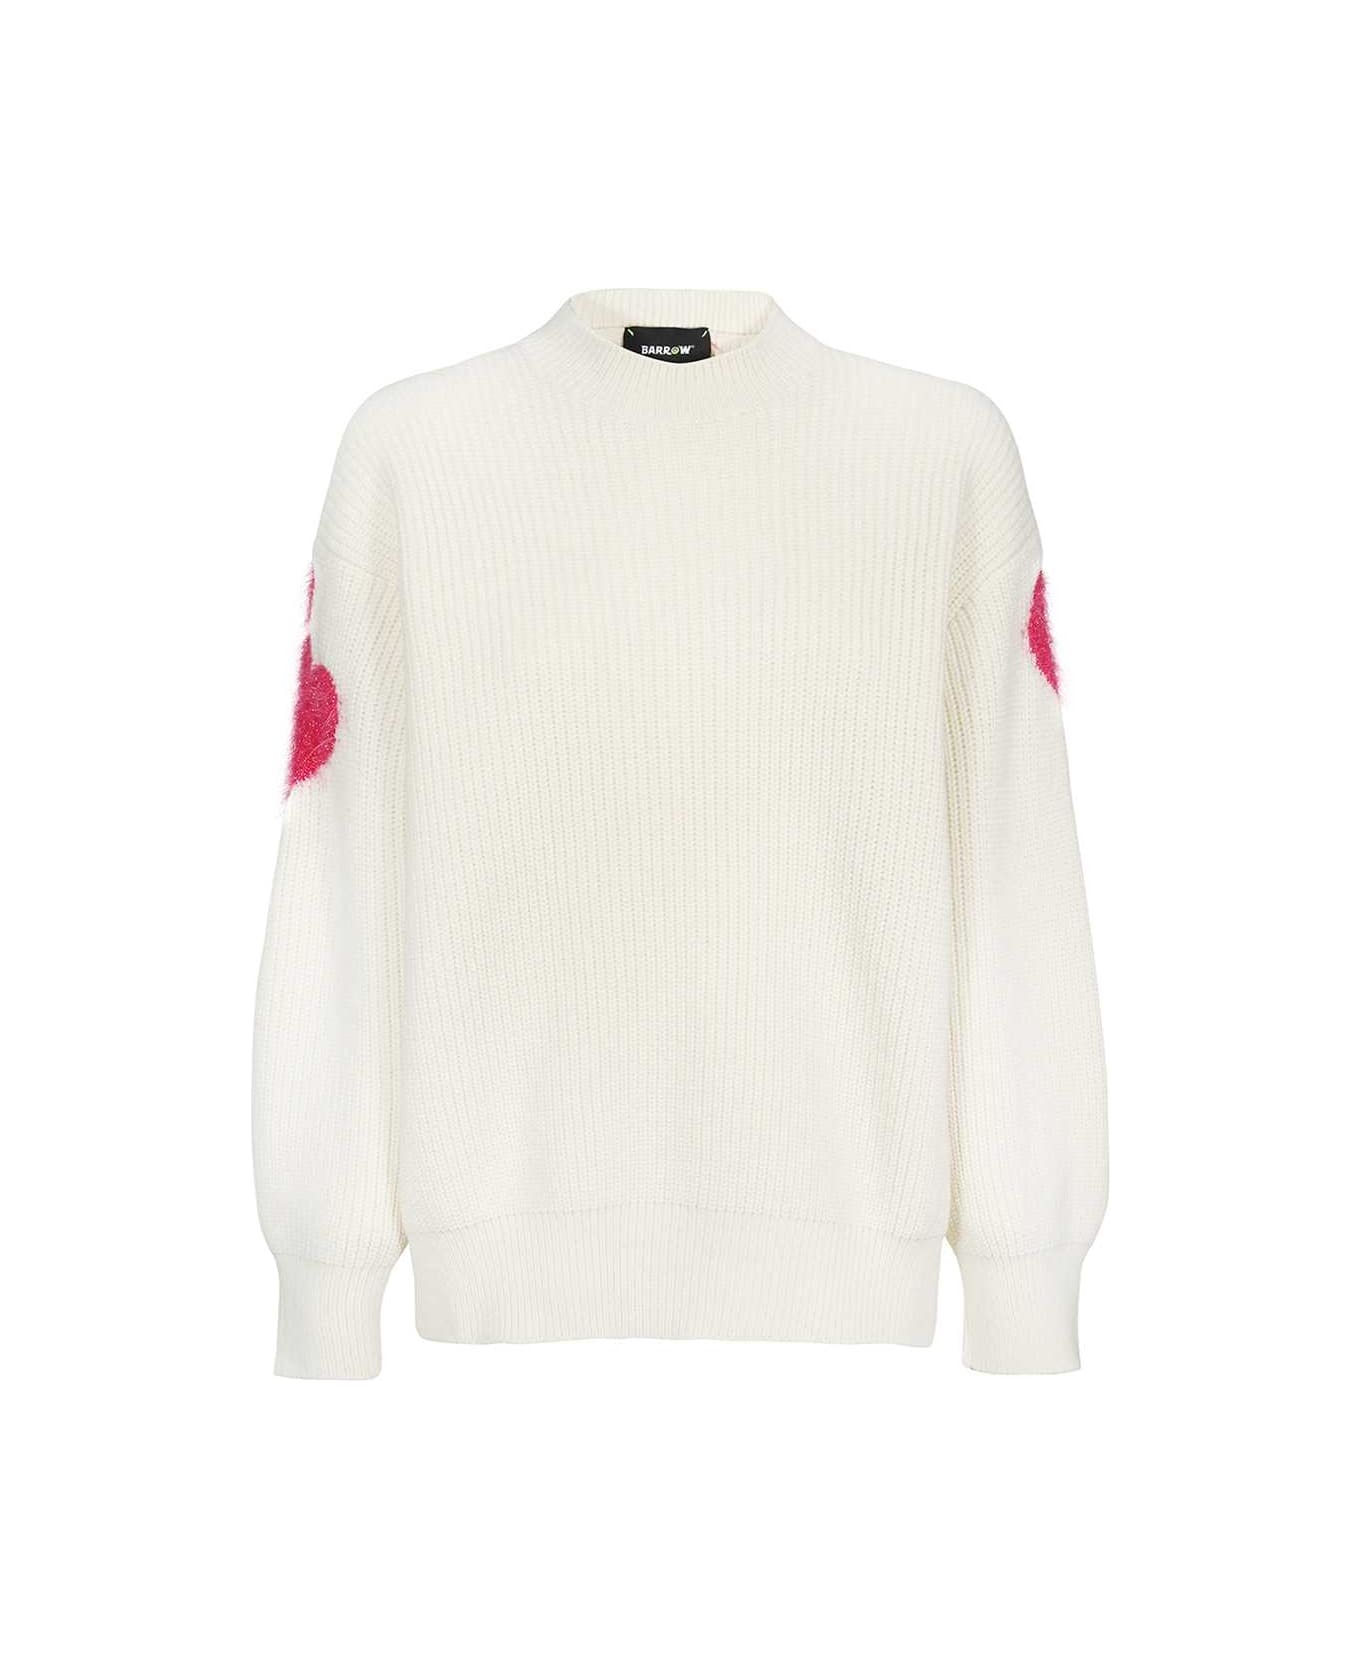 Barrow Turtleneck Sweater - White